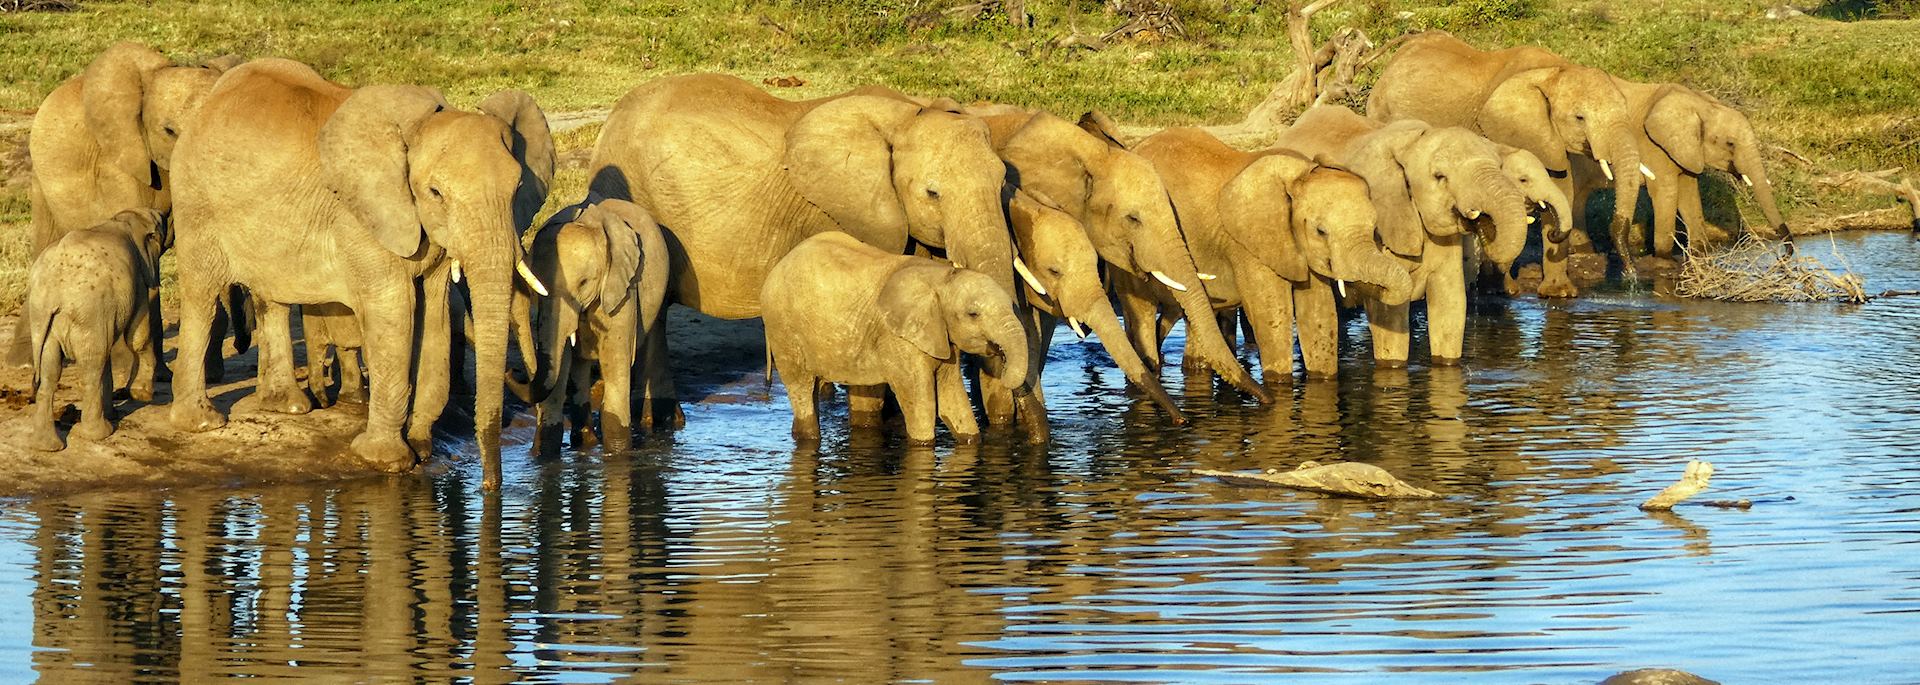 Elephants, Madikwe Game Reserve